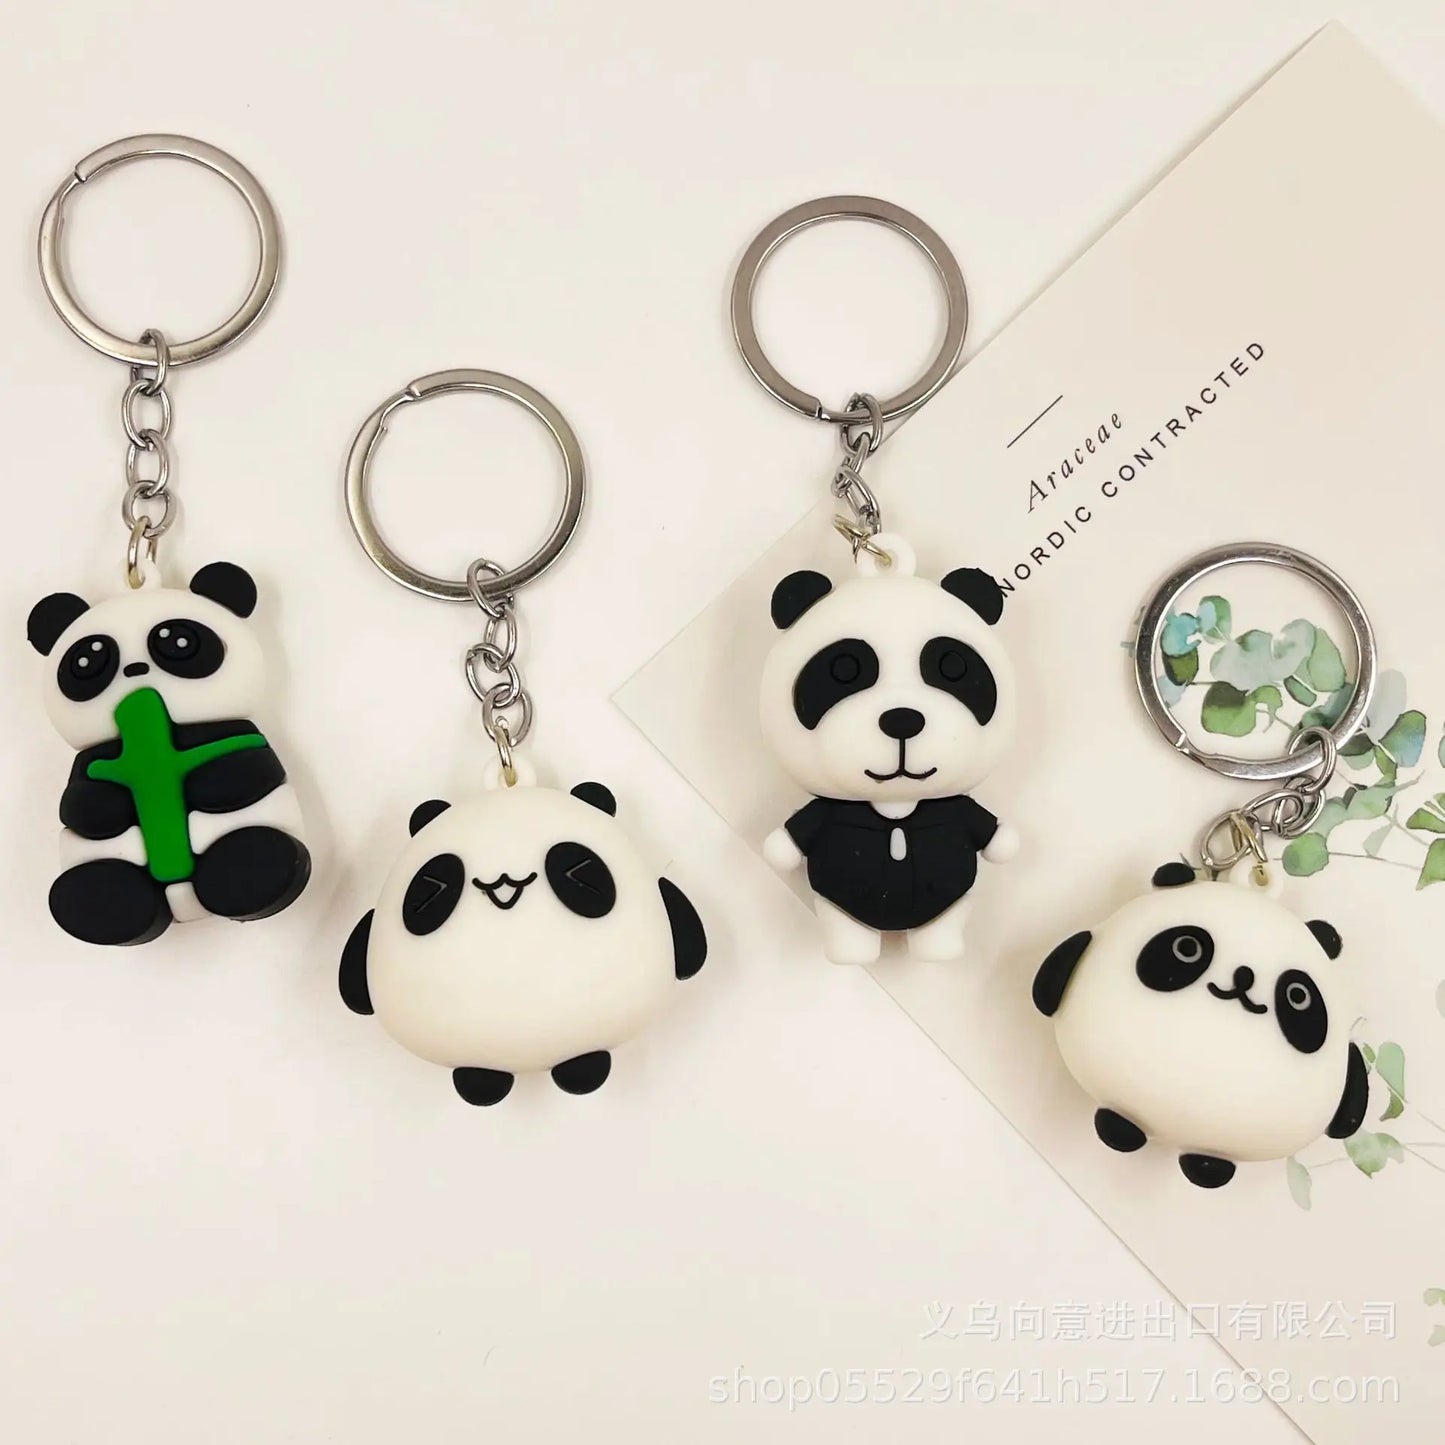 New Cute Panda Keychain